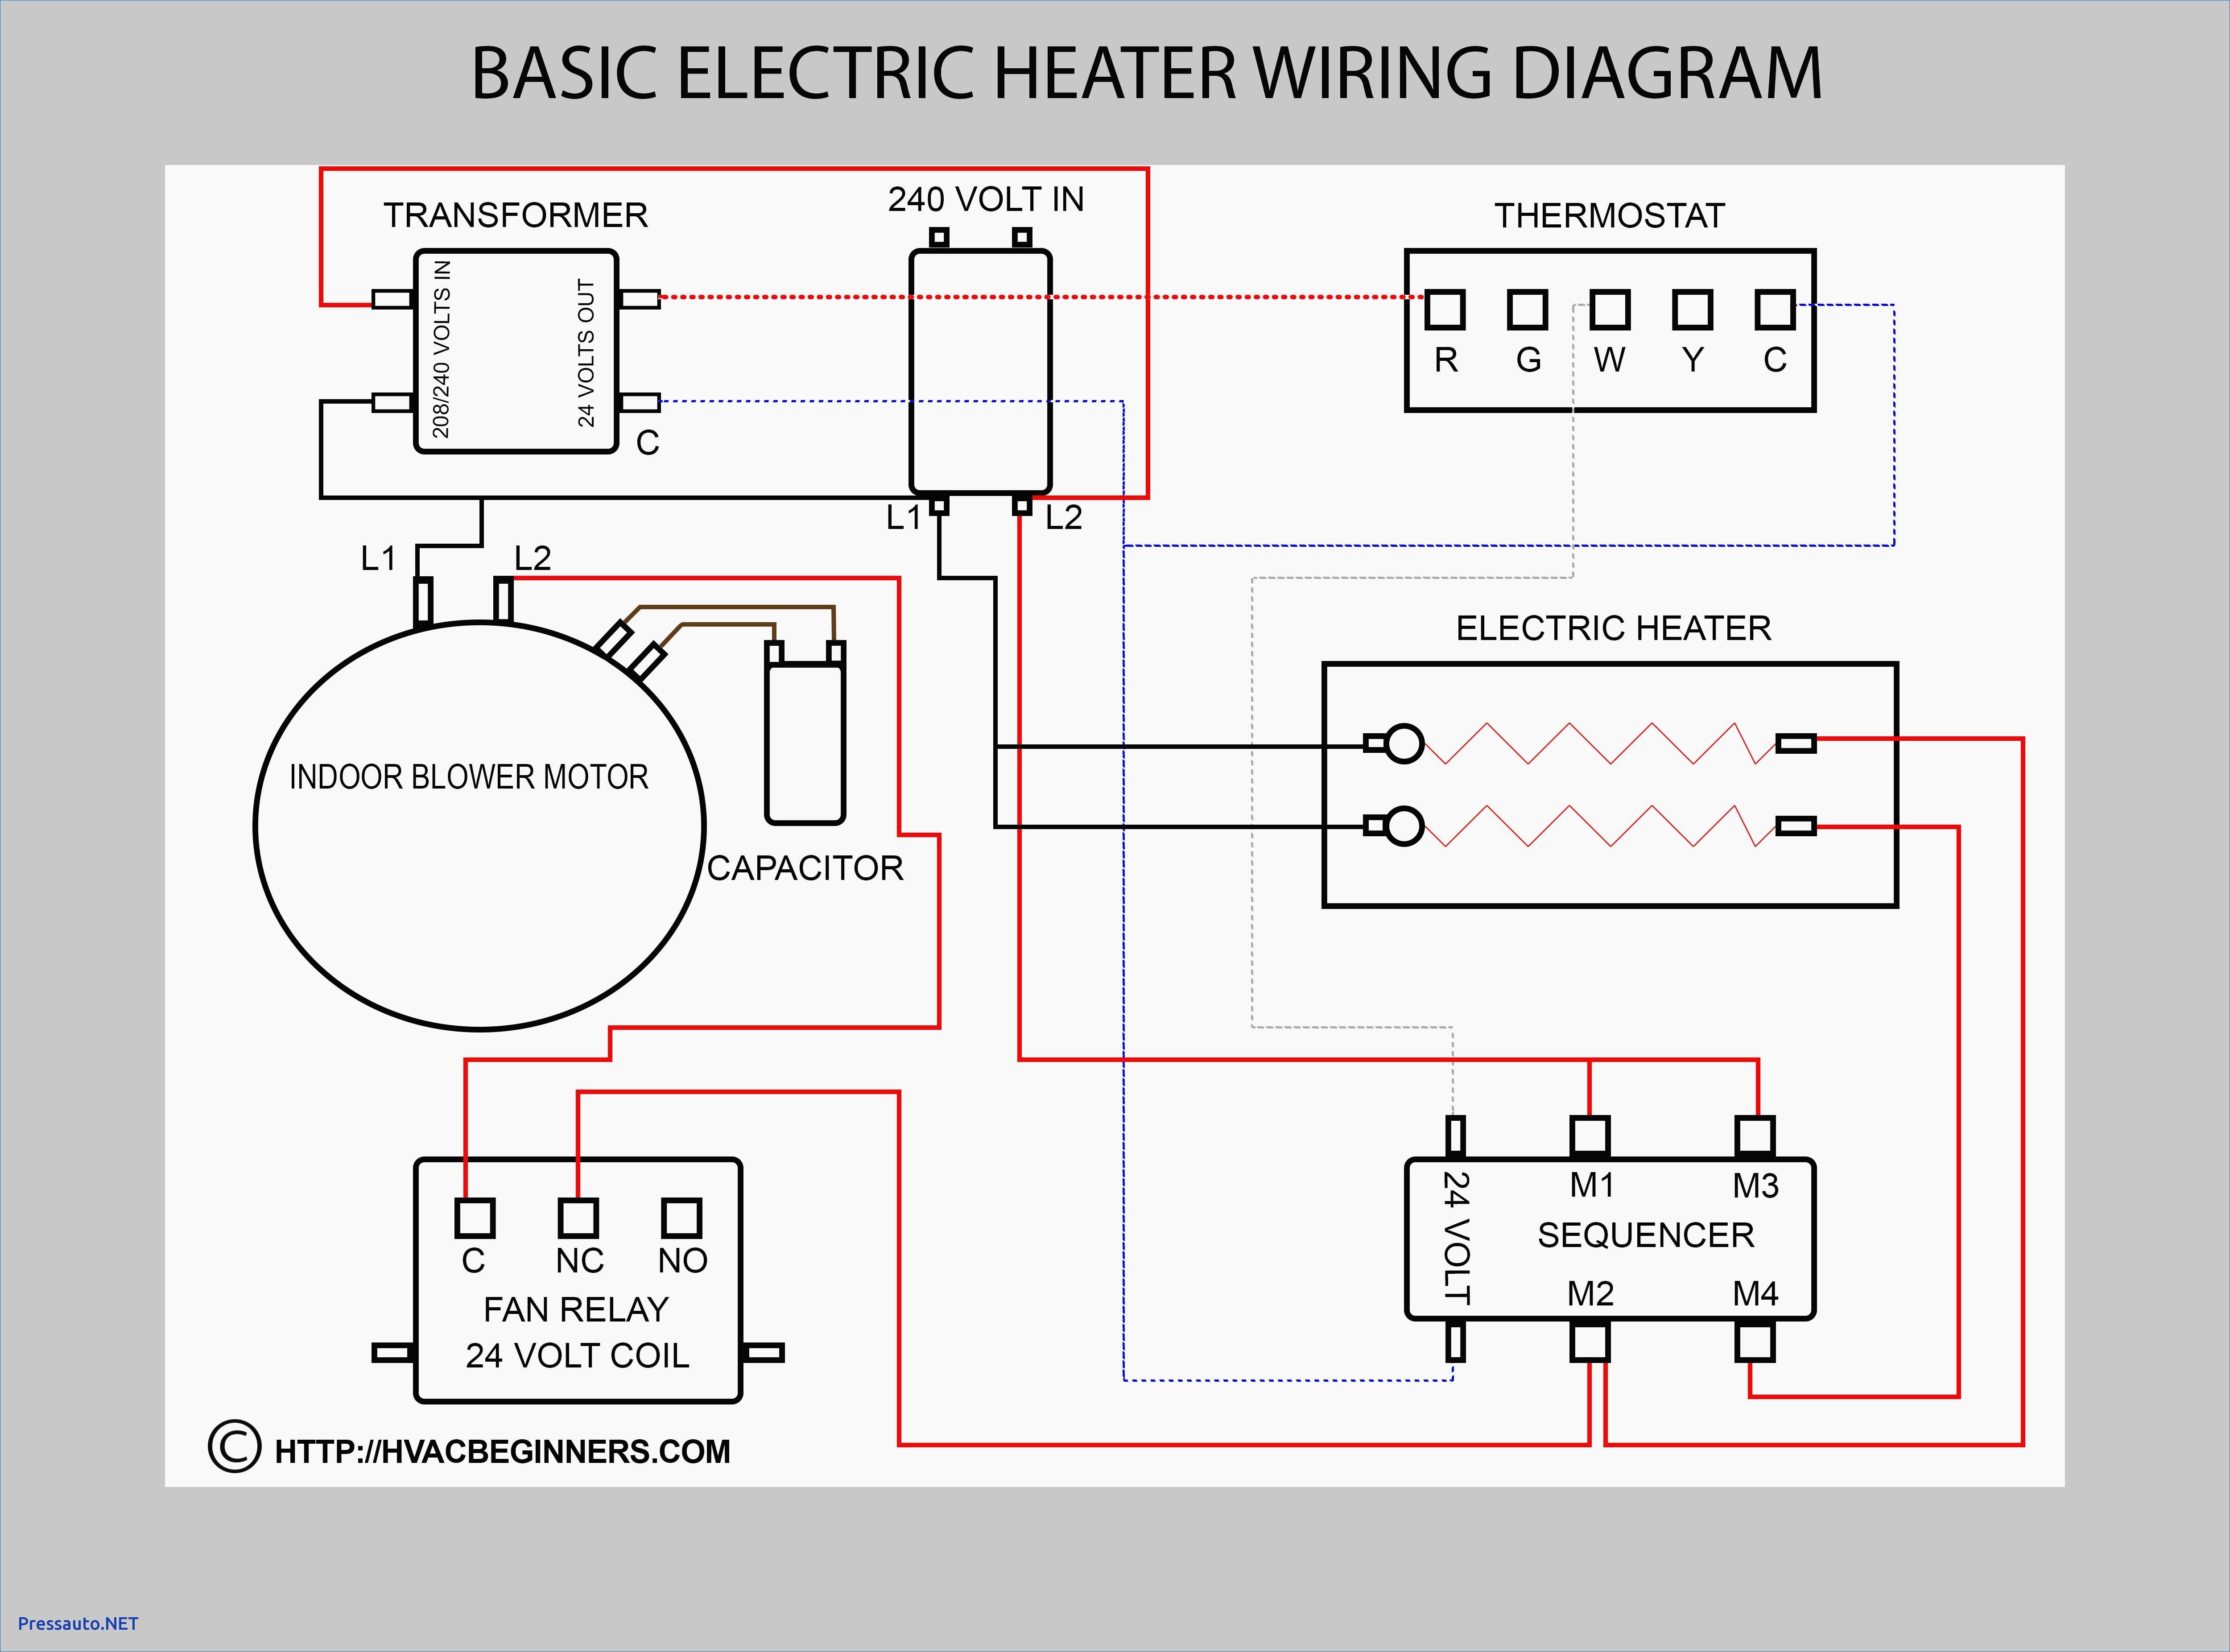 Square D Well Pump Pressure Switch Wiring Diagram Inspirational Pump - Well Pump Pressure Switch Wiring Diagram